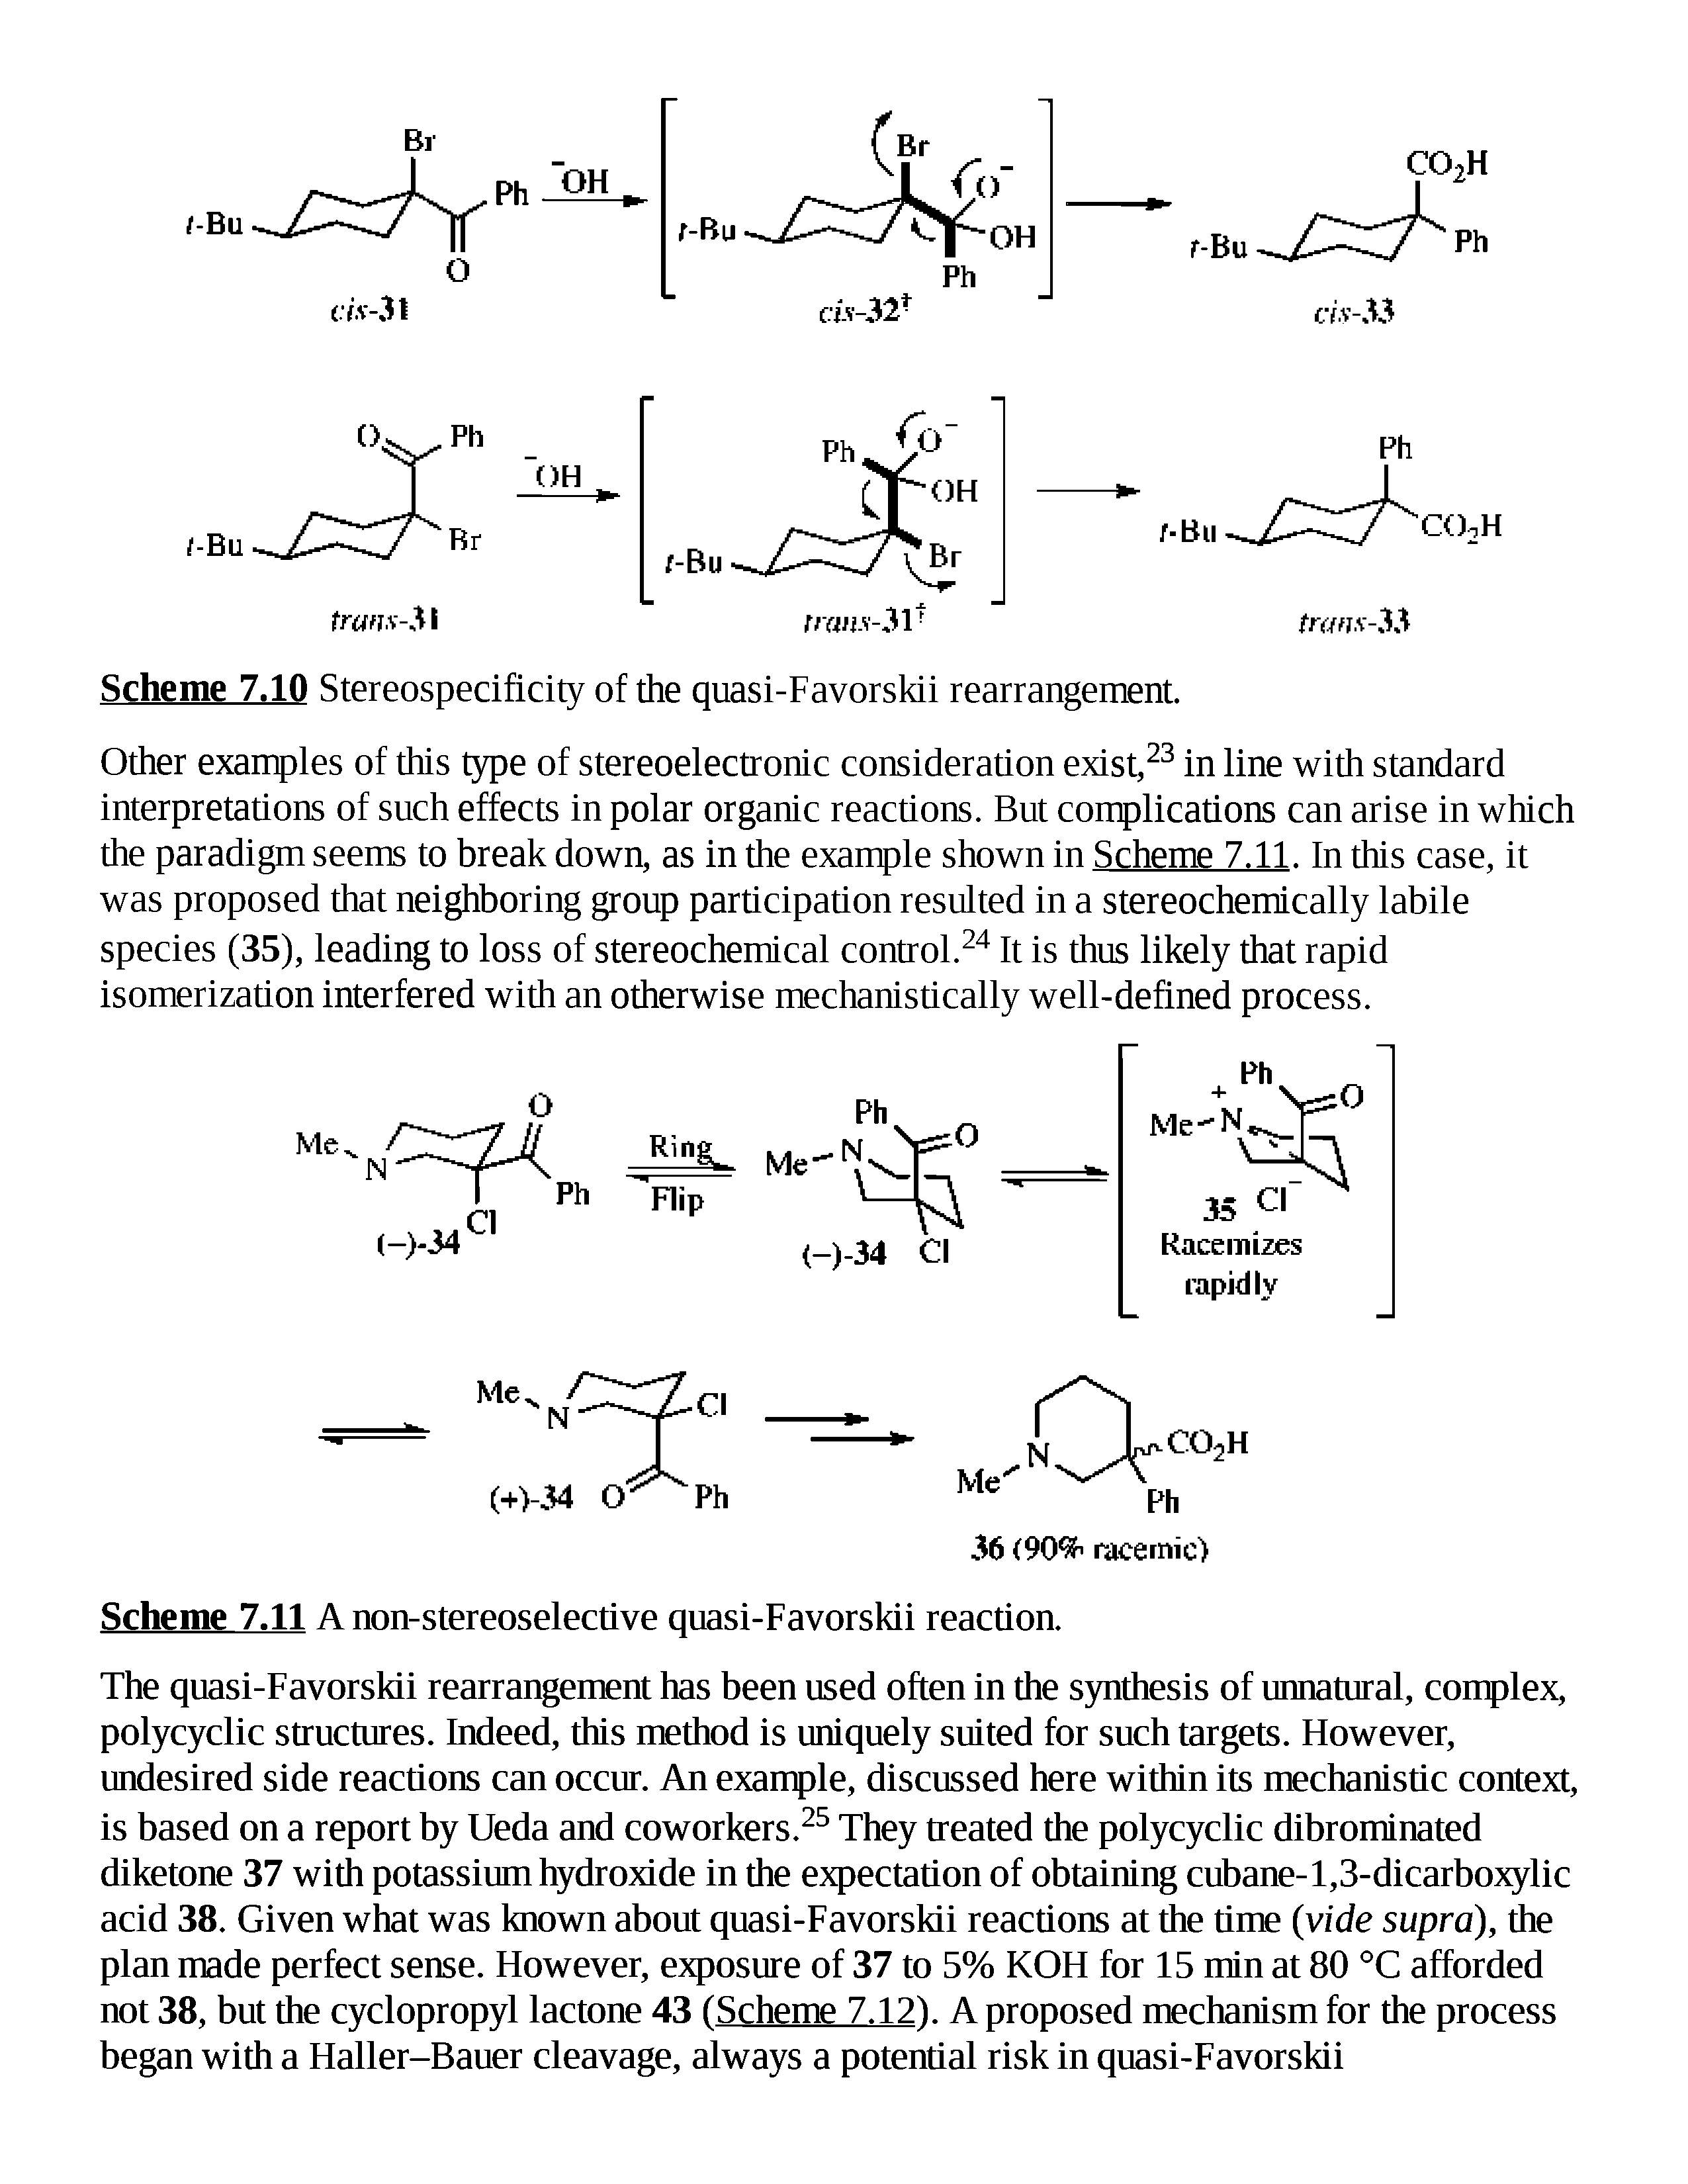 Scheme 7tlQ Stereospecificity of the quasi-Favorskii rearrangement.